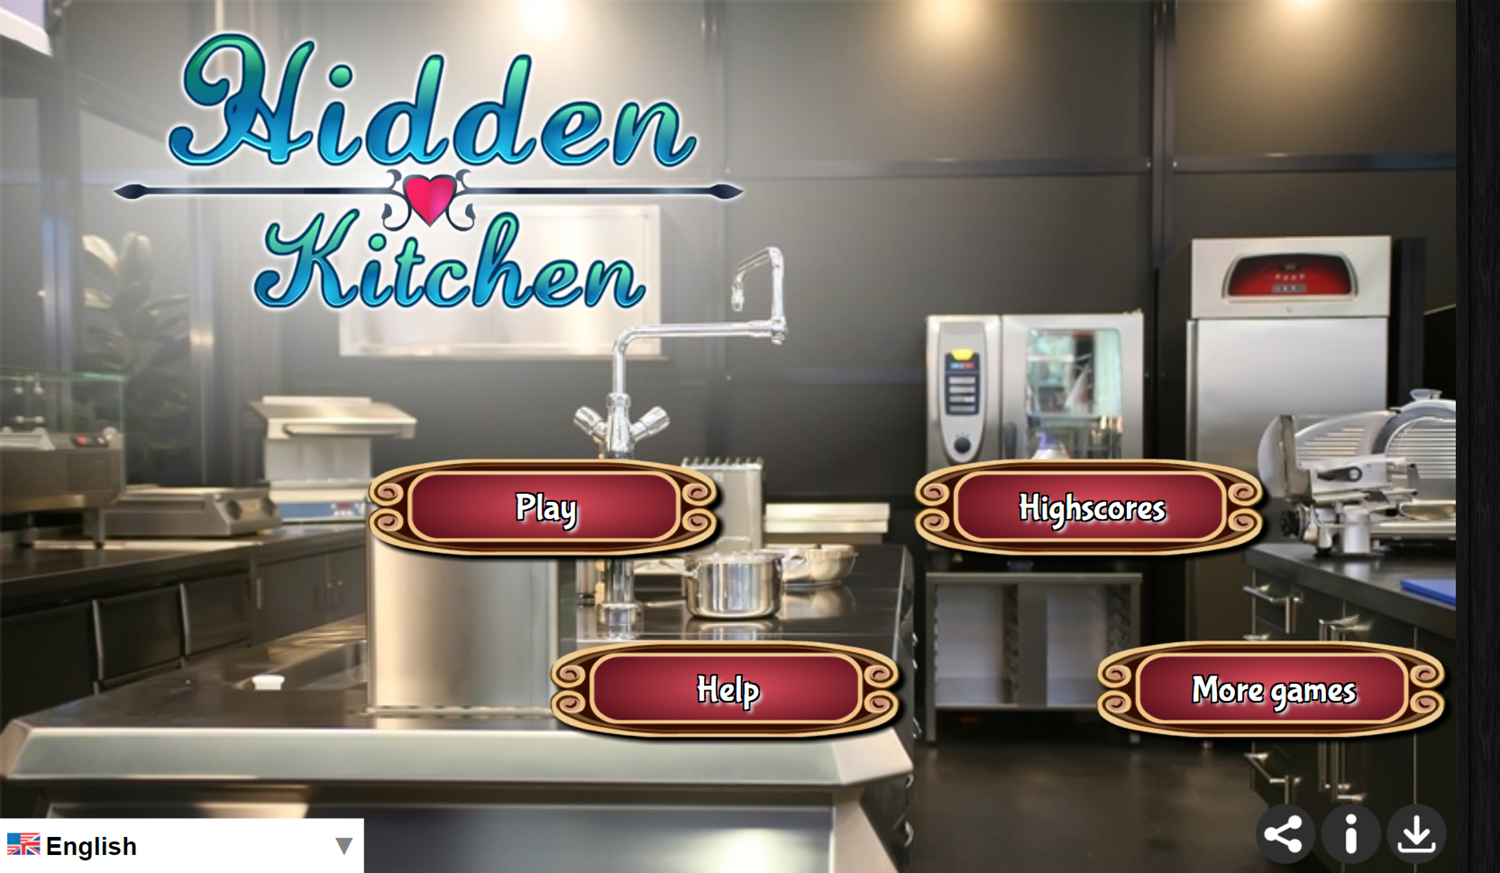 Hidden Kitchen Game Welcome Screen Screenshot.